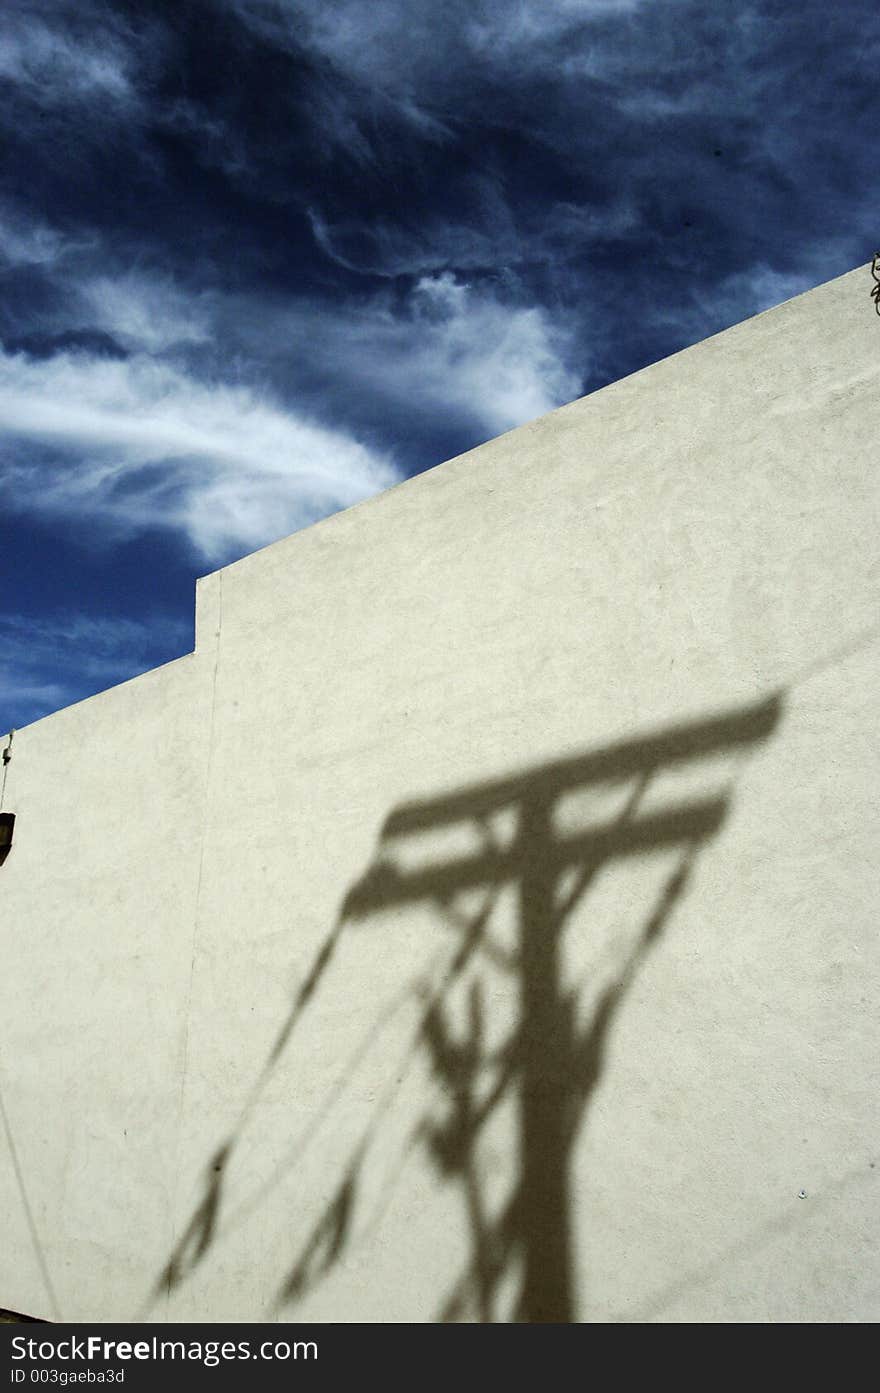 A utility pole casts a shadow on a concrete wall below a deep blue sky with wispy clouds. A utility pole casts a shadow on a concrete wall below a deep blue sky with wispy clouds